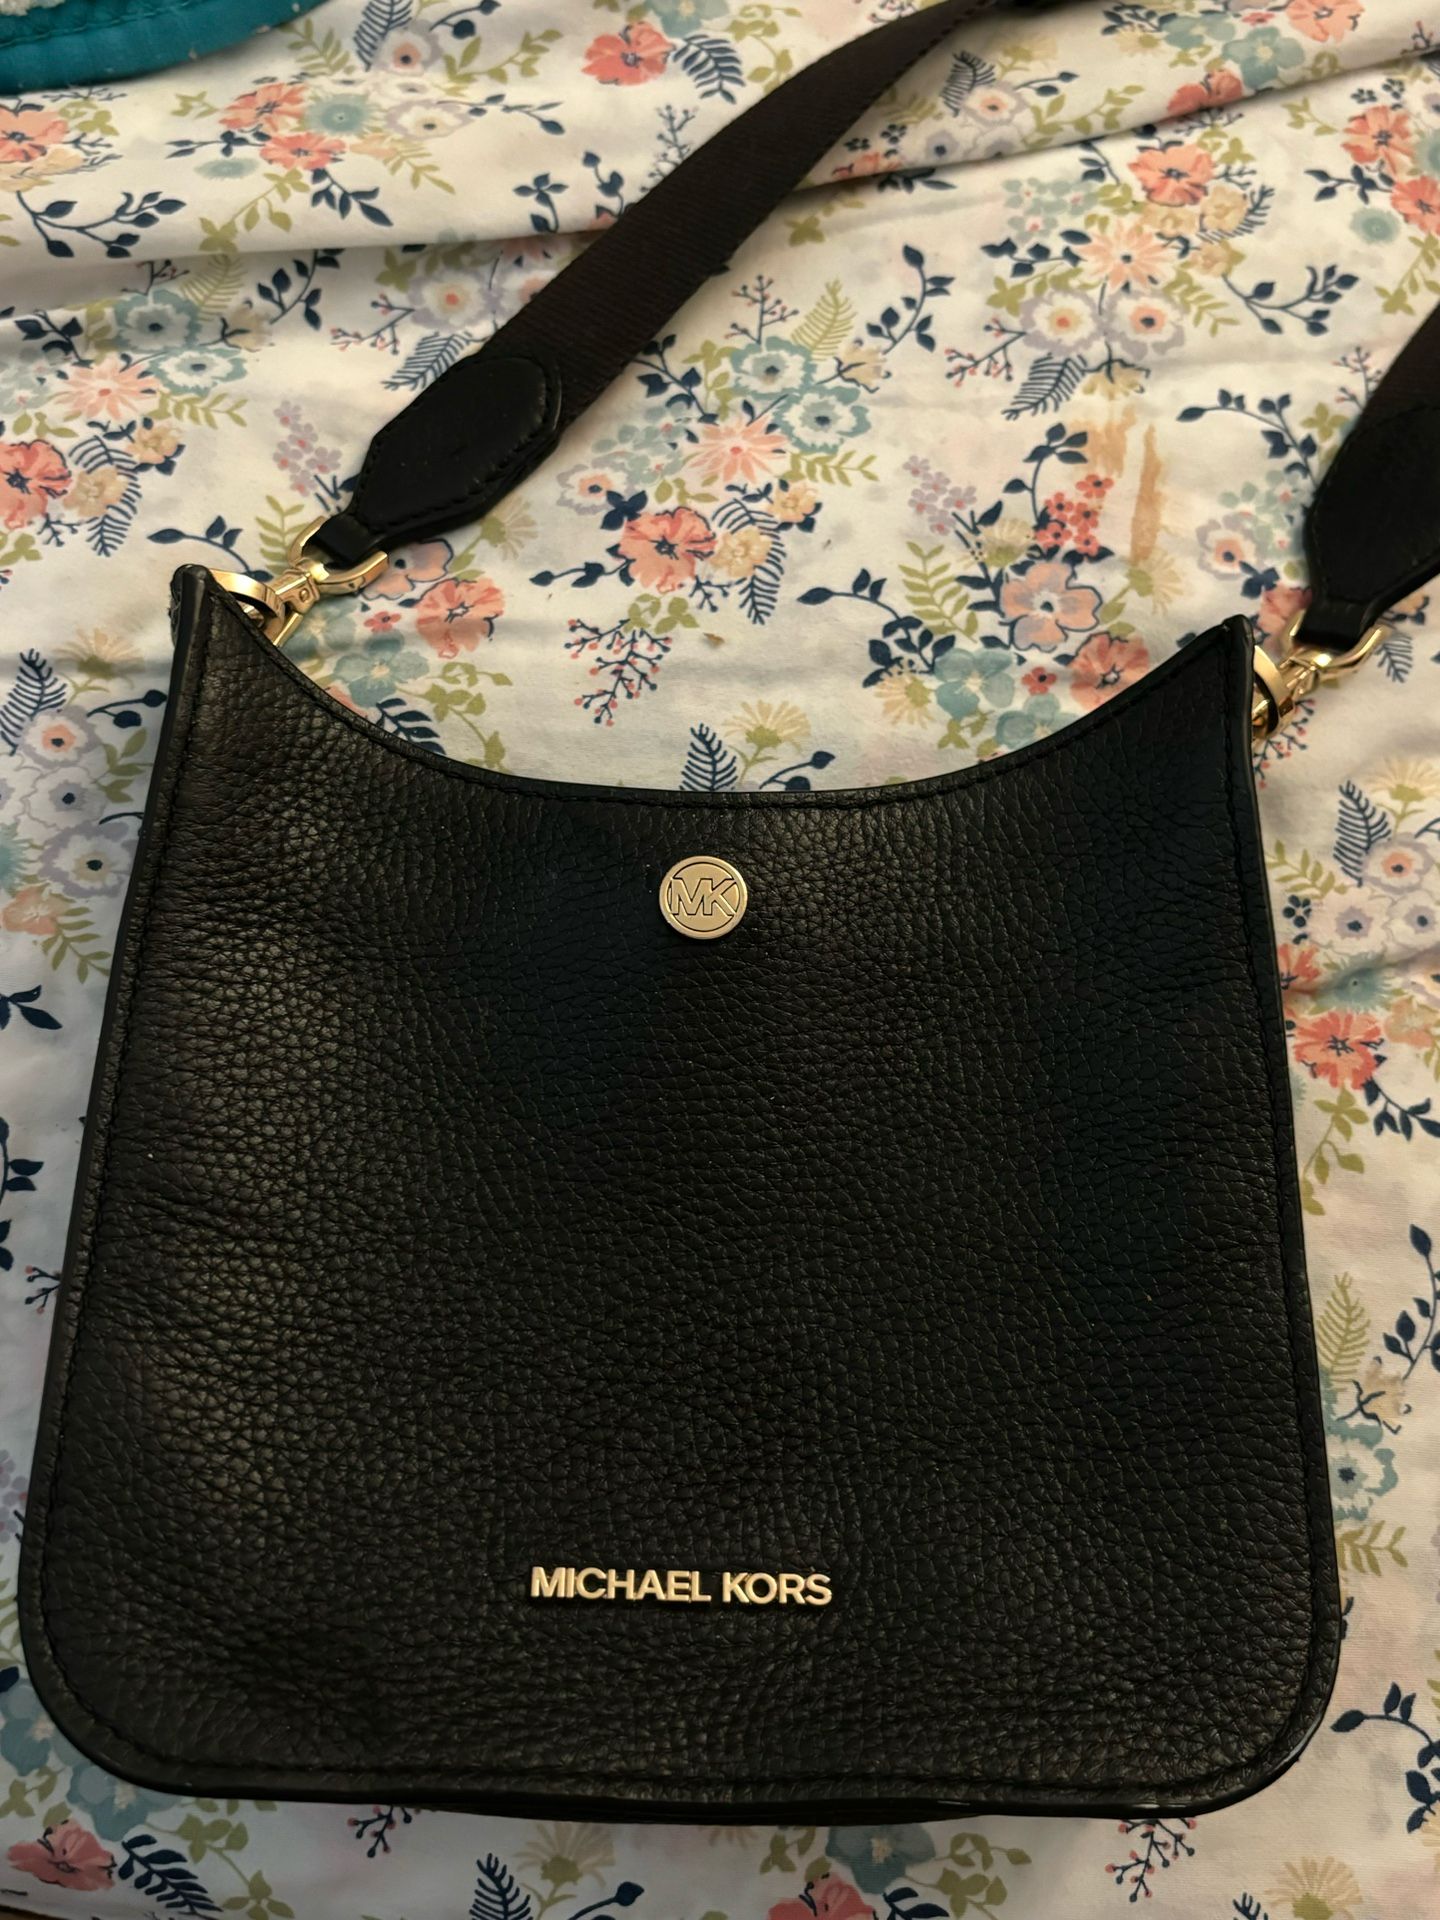 Micheal Kors Bag